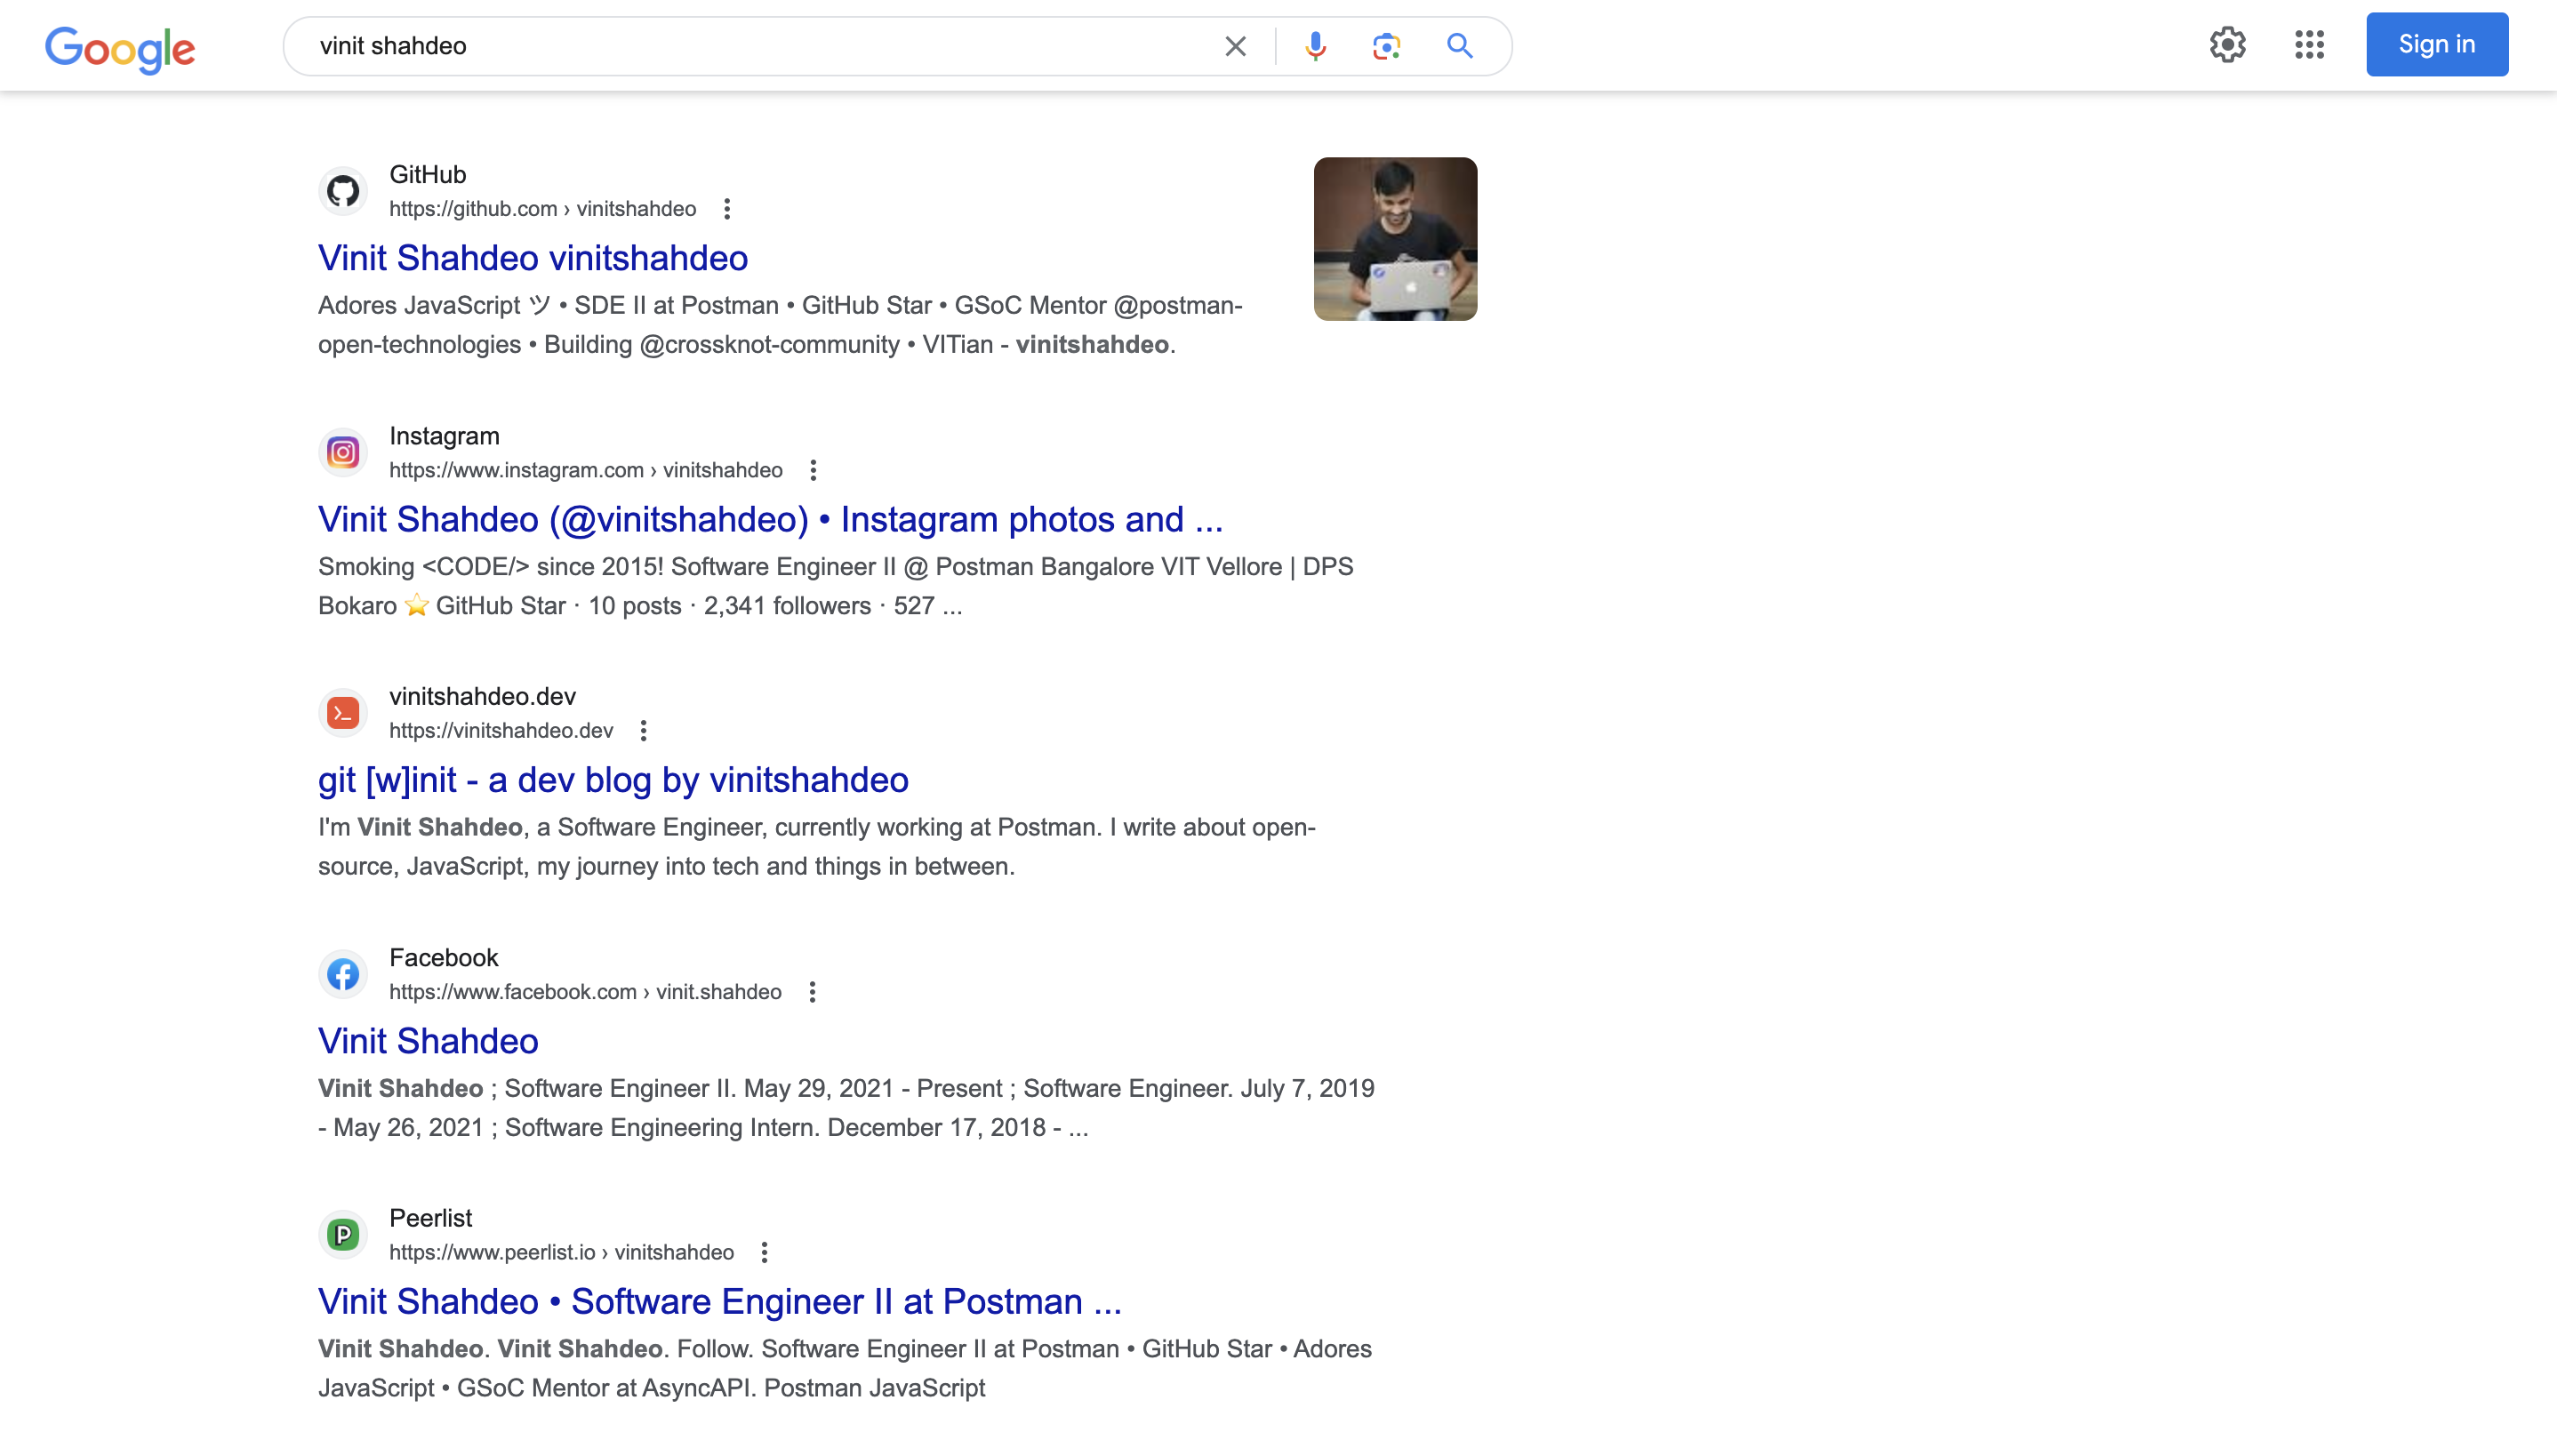 Peerlist Profile of Vinit Shahdeo on Google Search